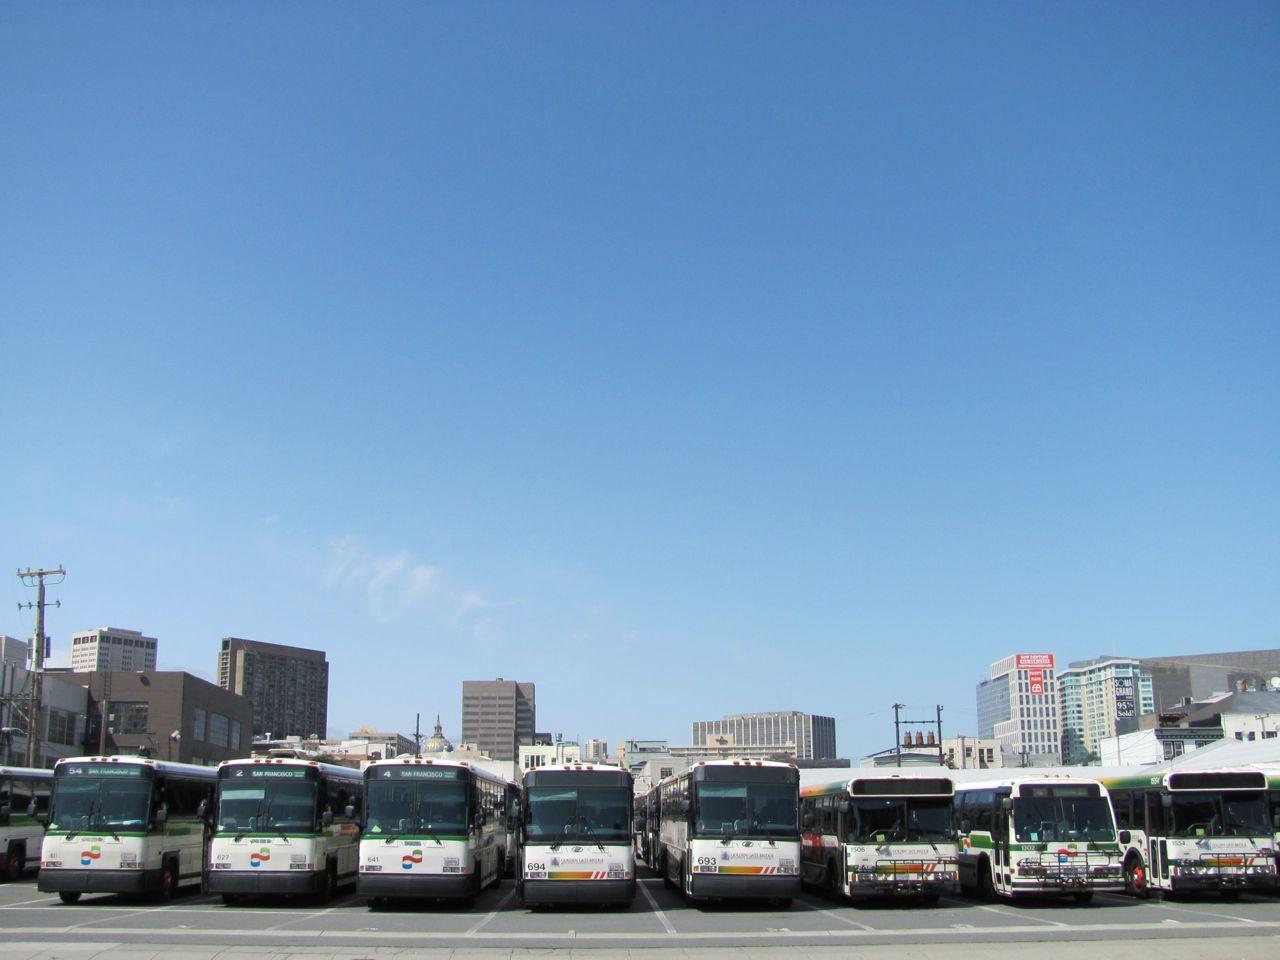 Golden Gate Transit Bus Parking Lot